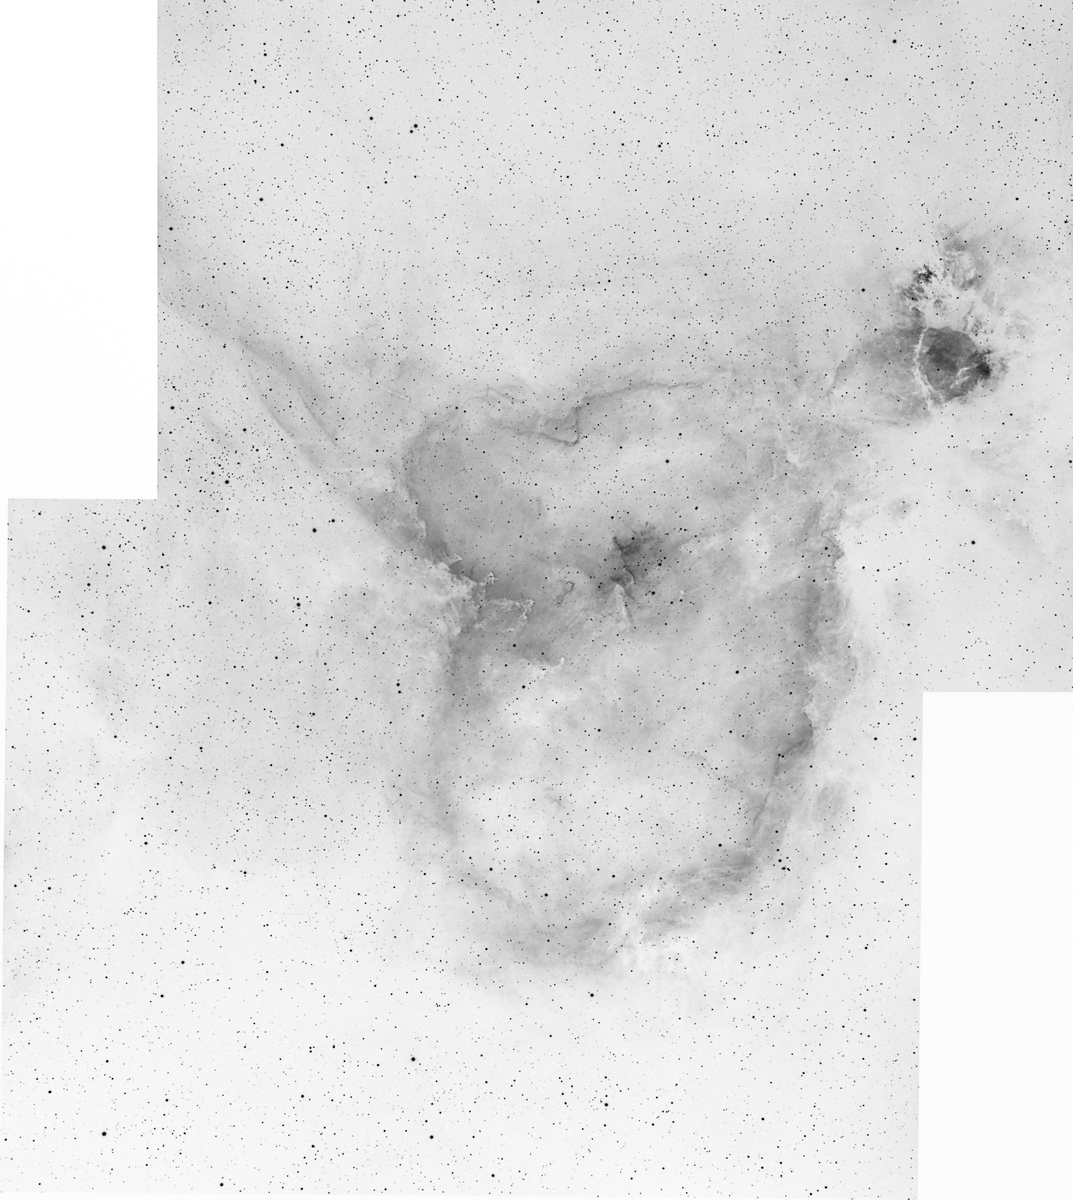 IC1805 Heart Nebula in Ha (two panel mosaic)